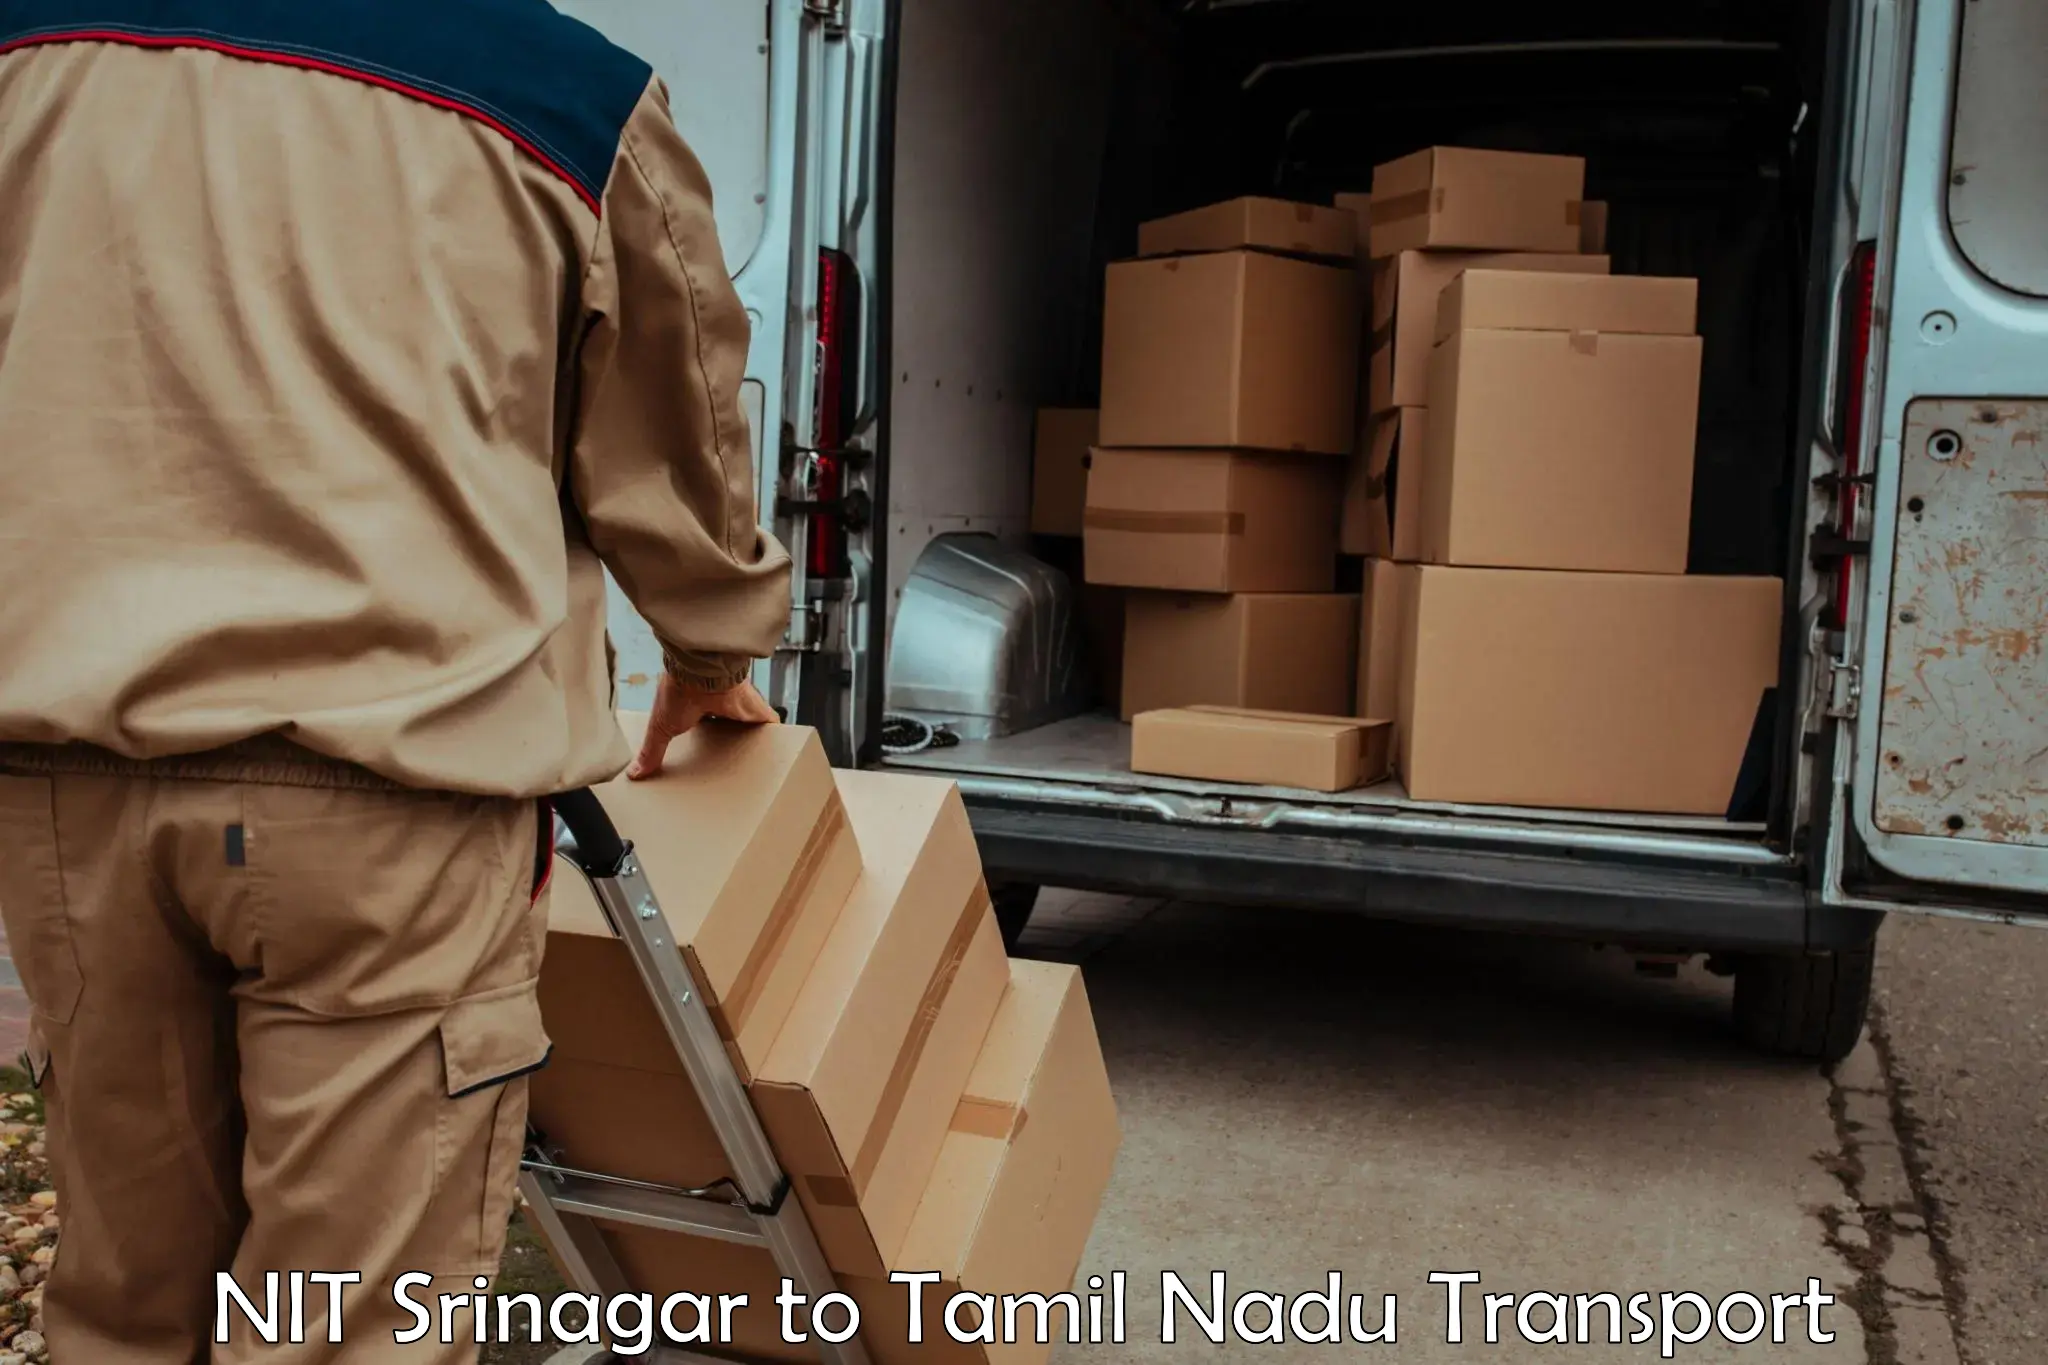 Online transport service NIT Srinagar to Nilgiris